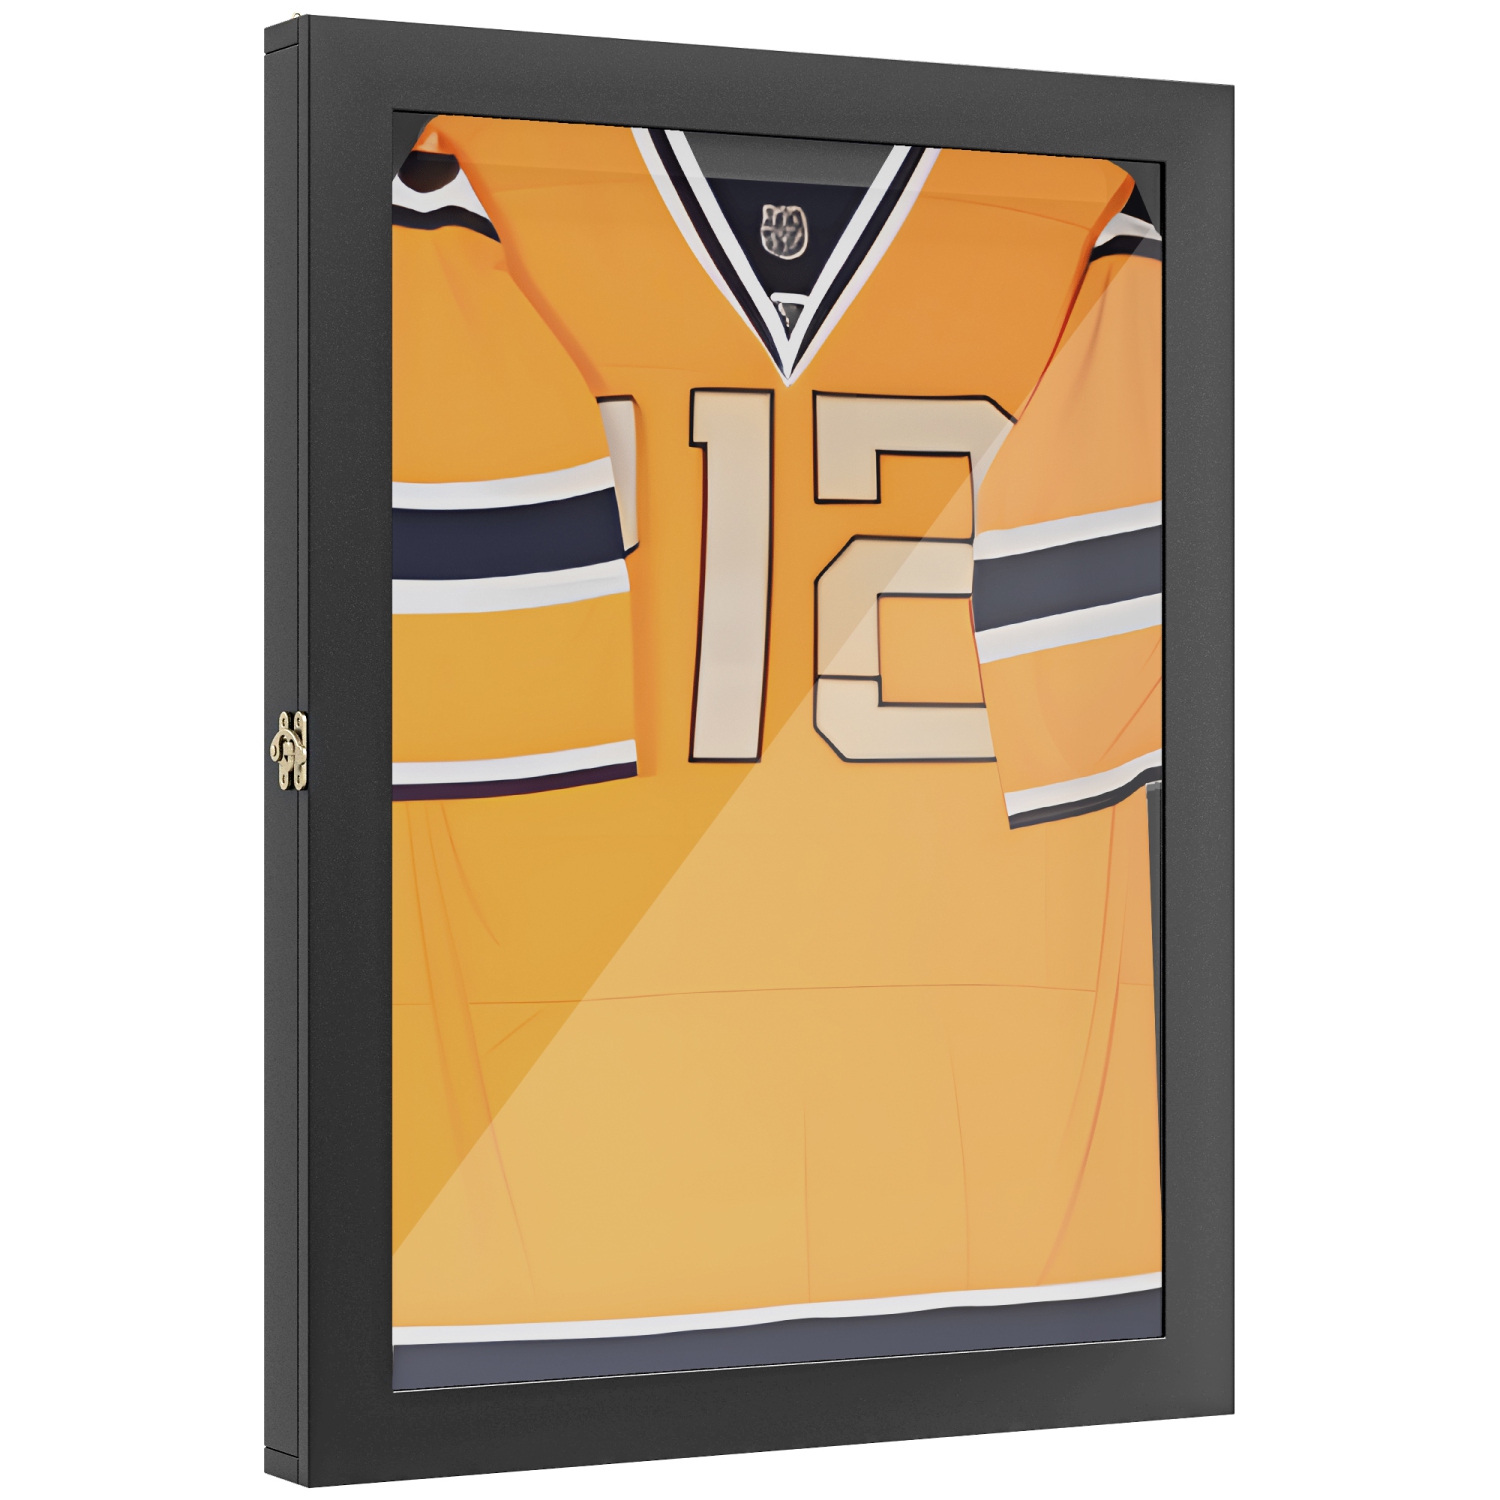 HOMCOM Jersey Frame Display Case Shirt Shadow Box Cabinet Football Baseball Basketball, Black